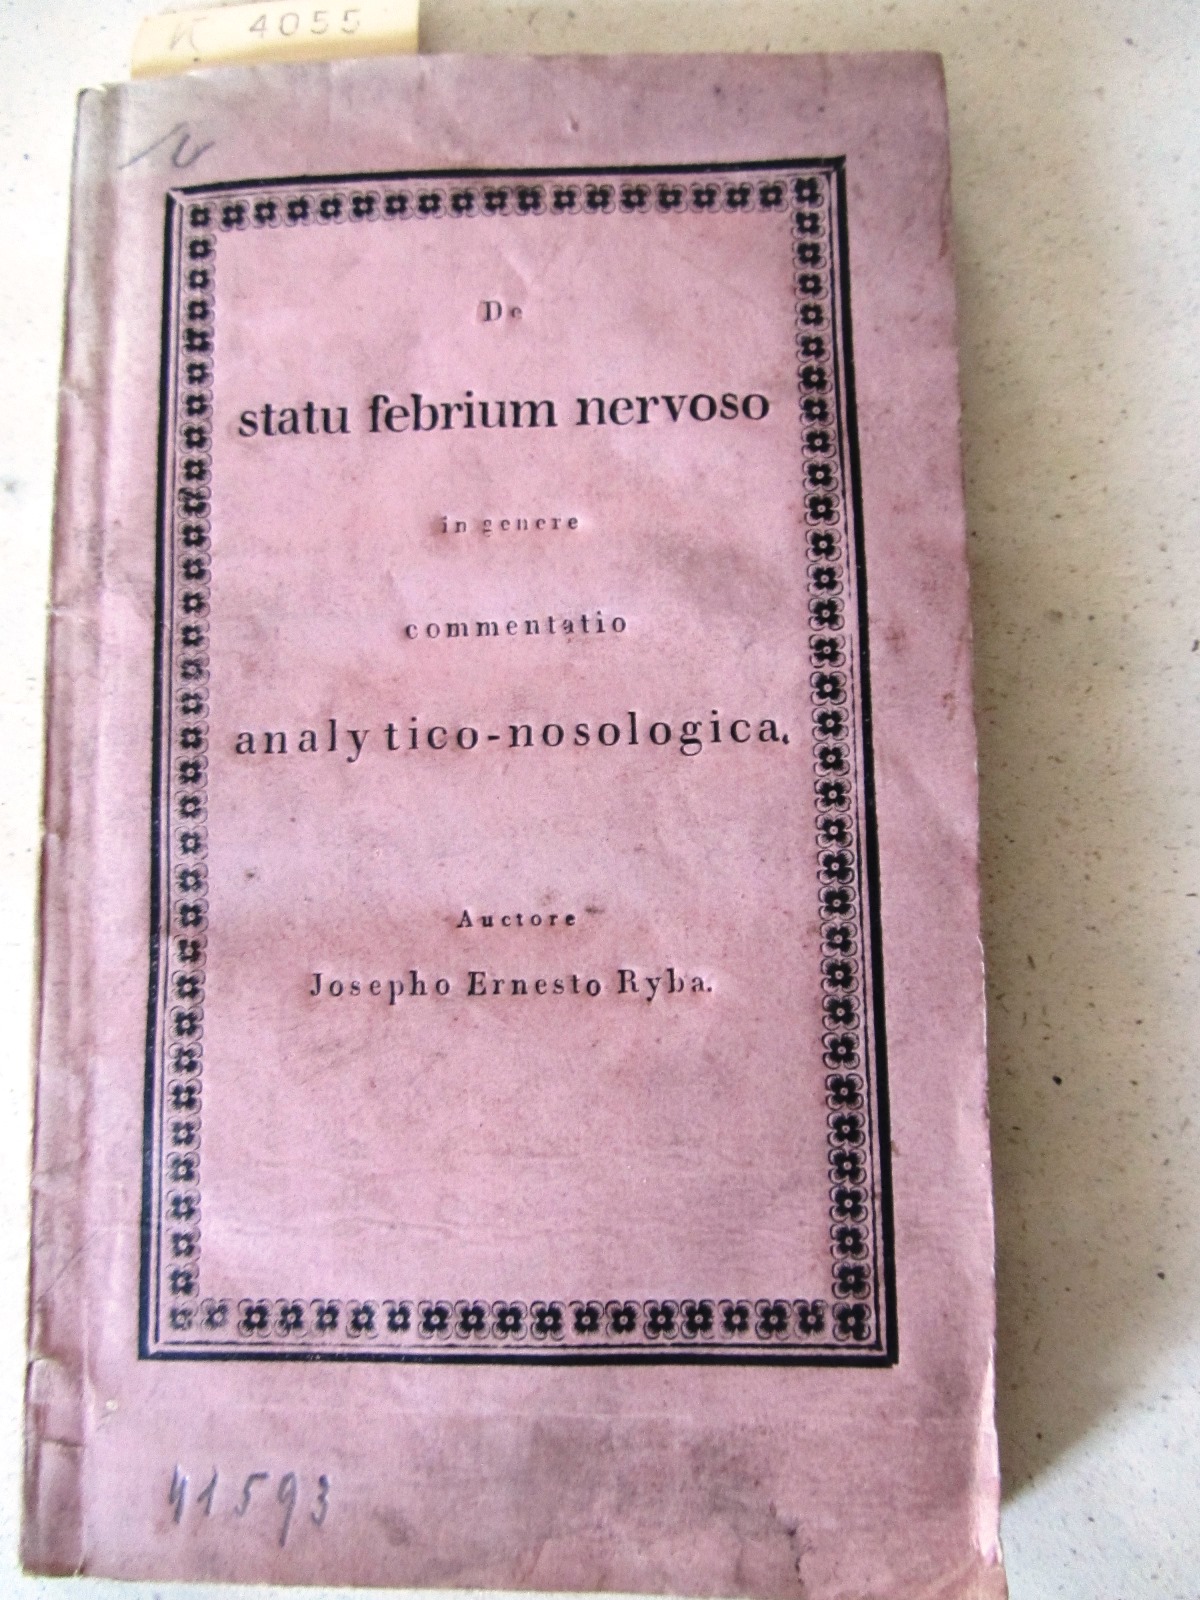 Ryba, Josepho Ernesto:  De statu febrium nervoso in genere commentatio analytico-nosologica. (Dissertation). 